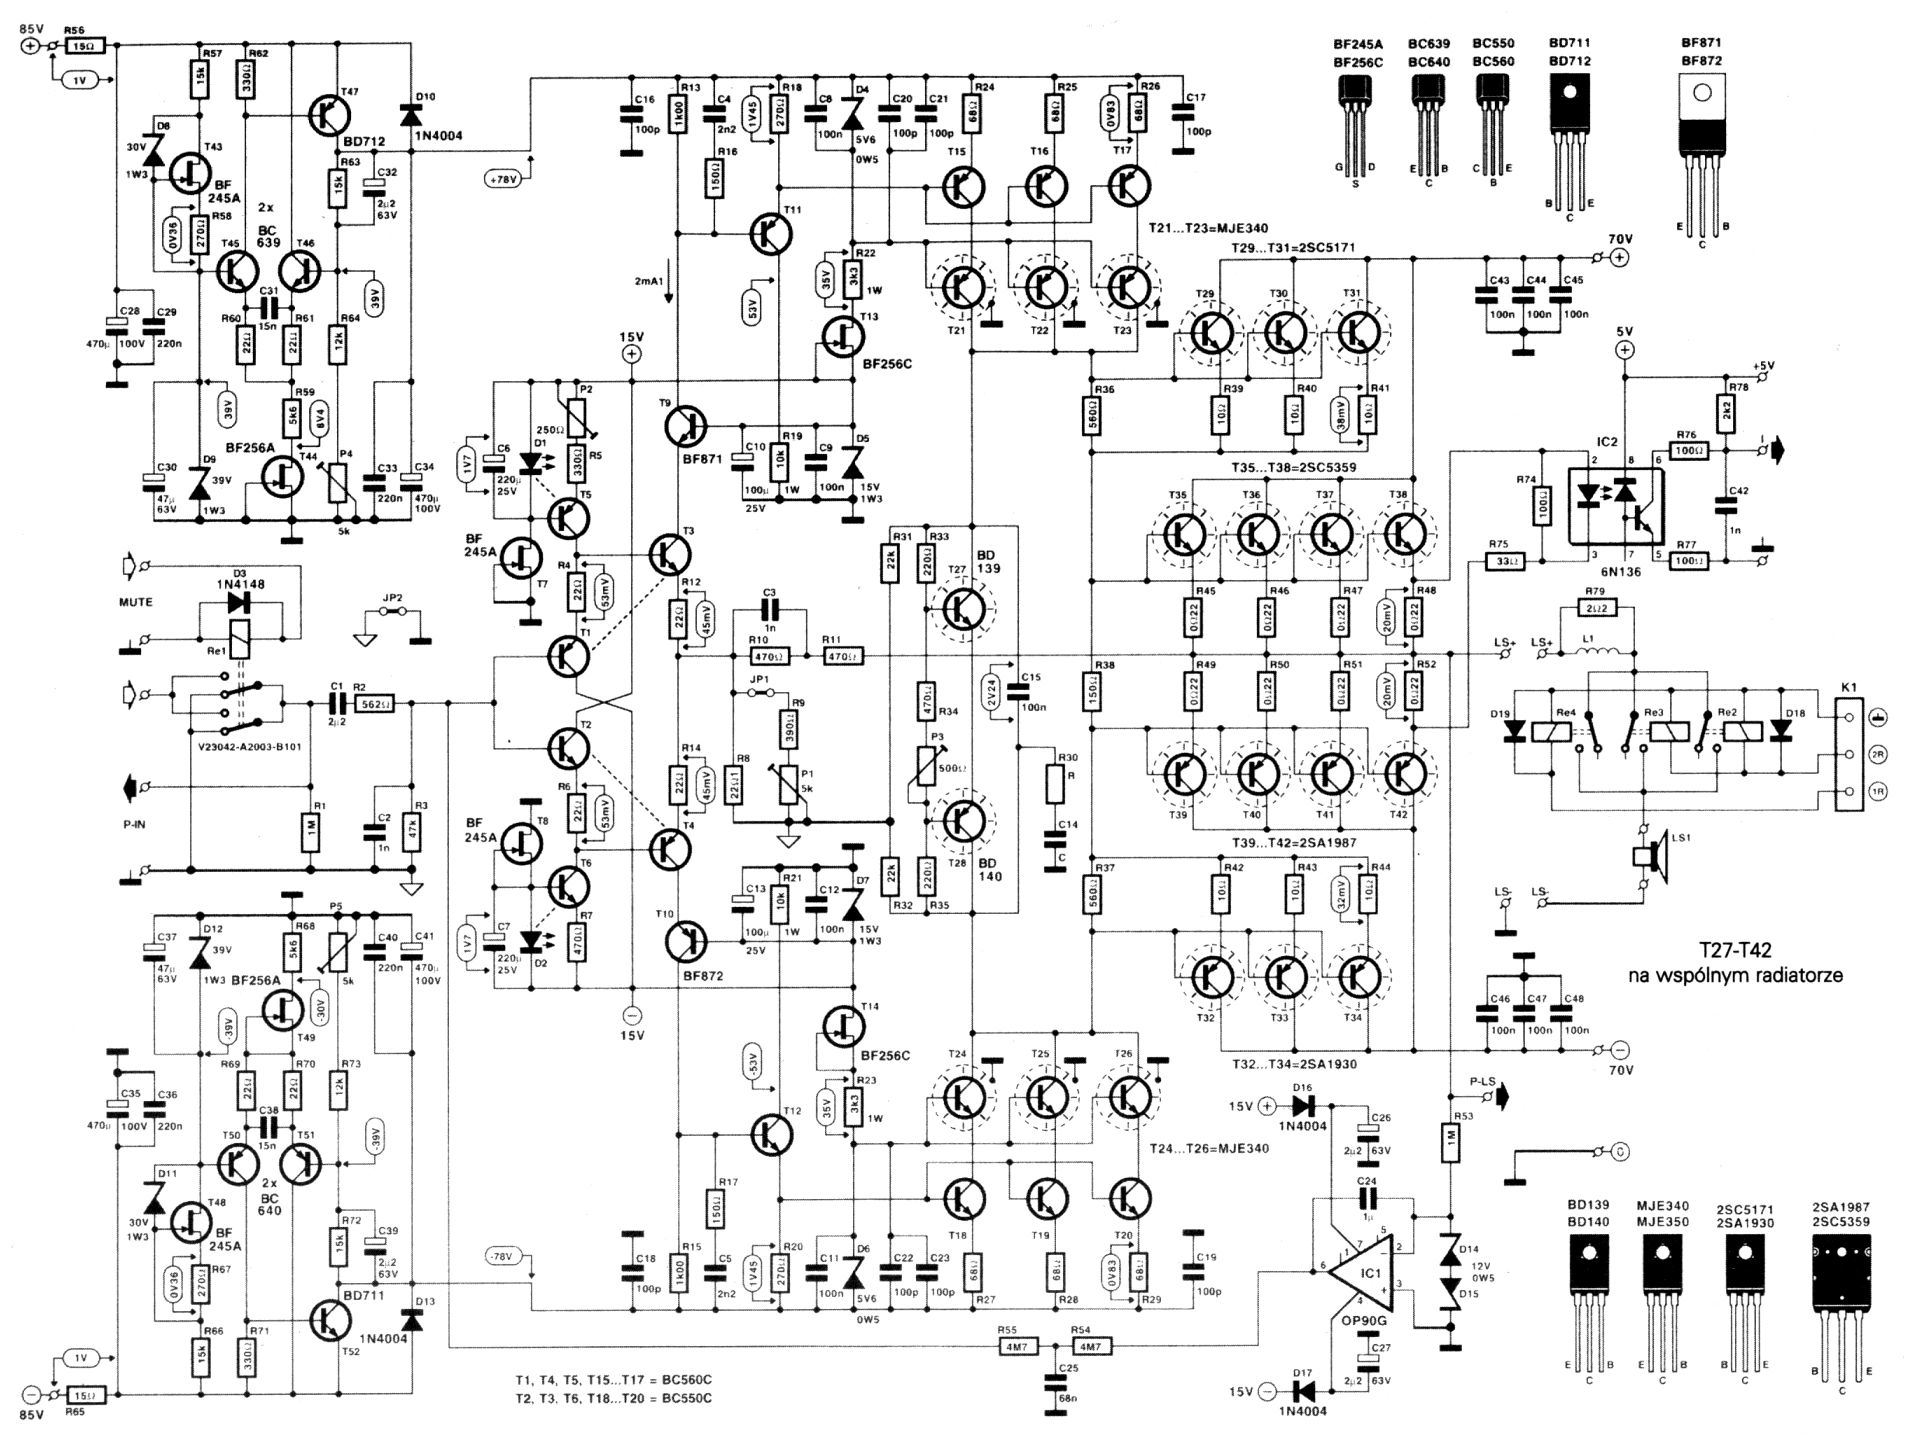 2000w Transistor Audio Power Amplifier Circuit Diagrsms - Power Amplifier 2000 Watt - 2000w Transistor Audio Power Amplifier Circuit Diagrsms